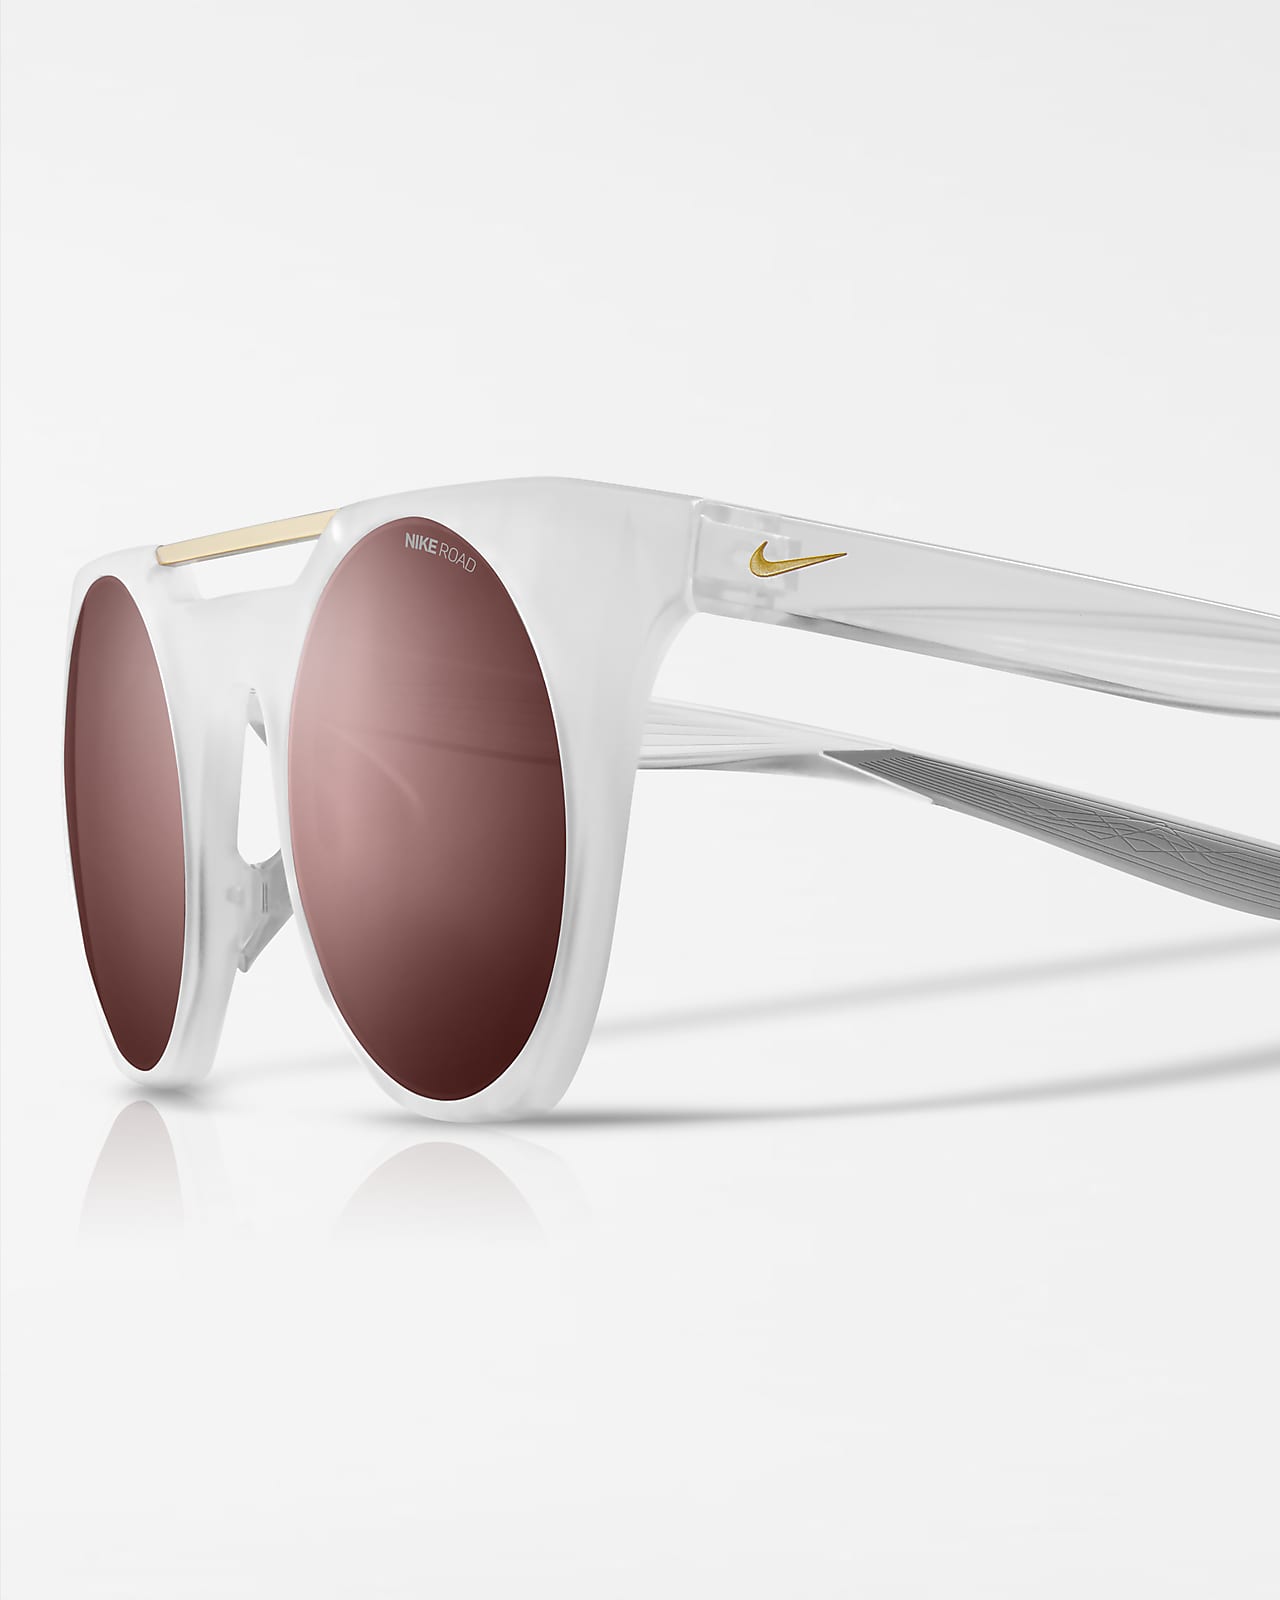 Nike Bandit Rise Road Tint Sunglasses